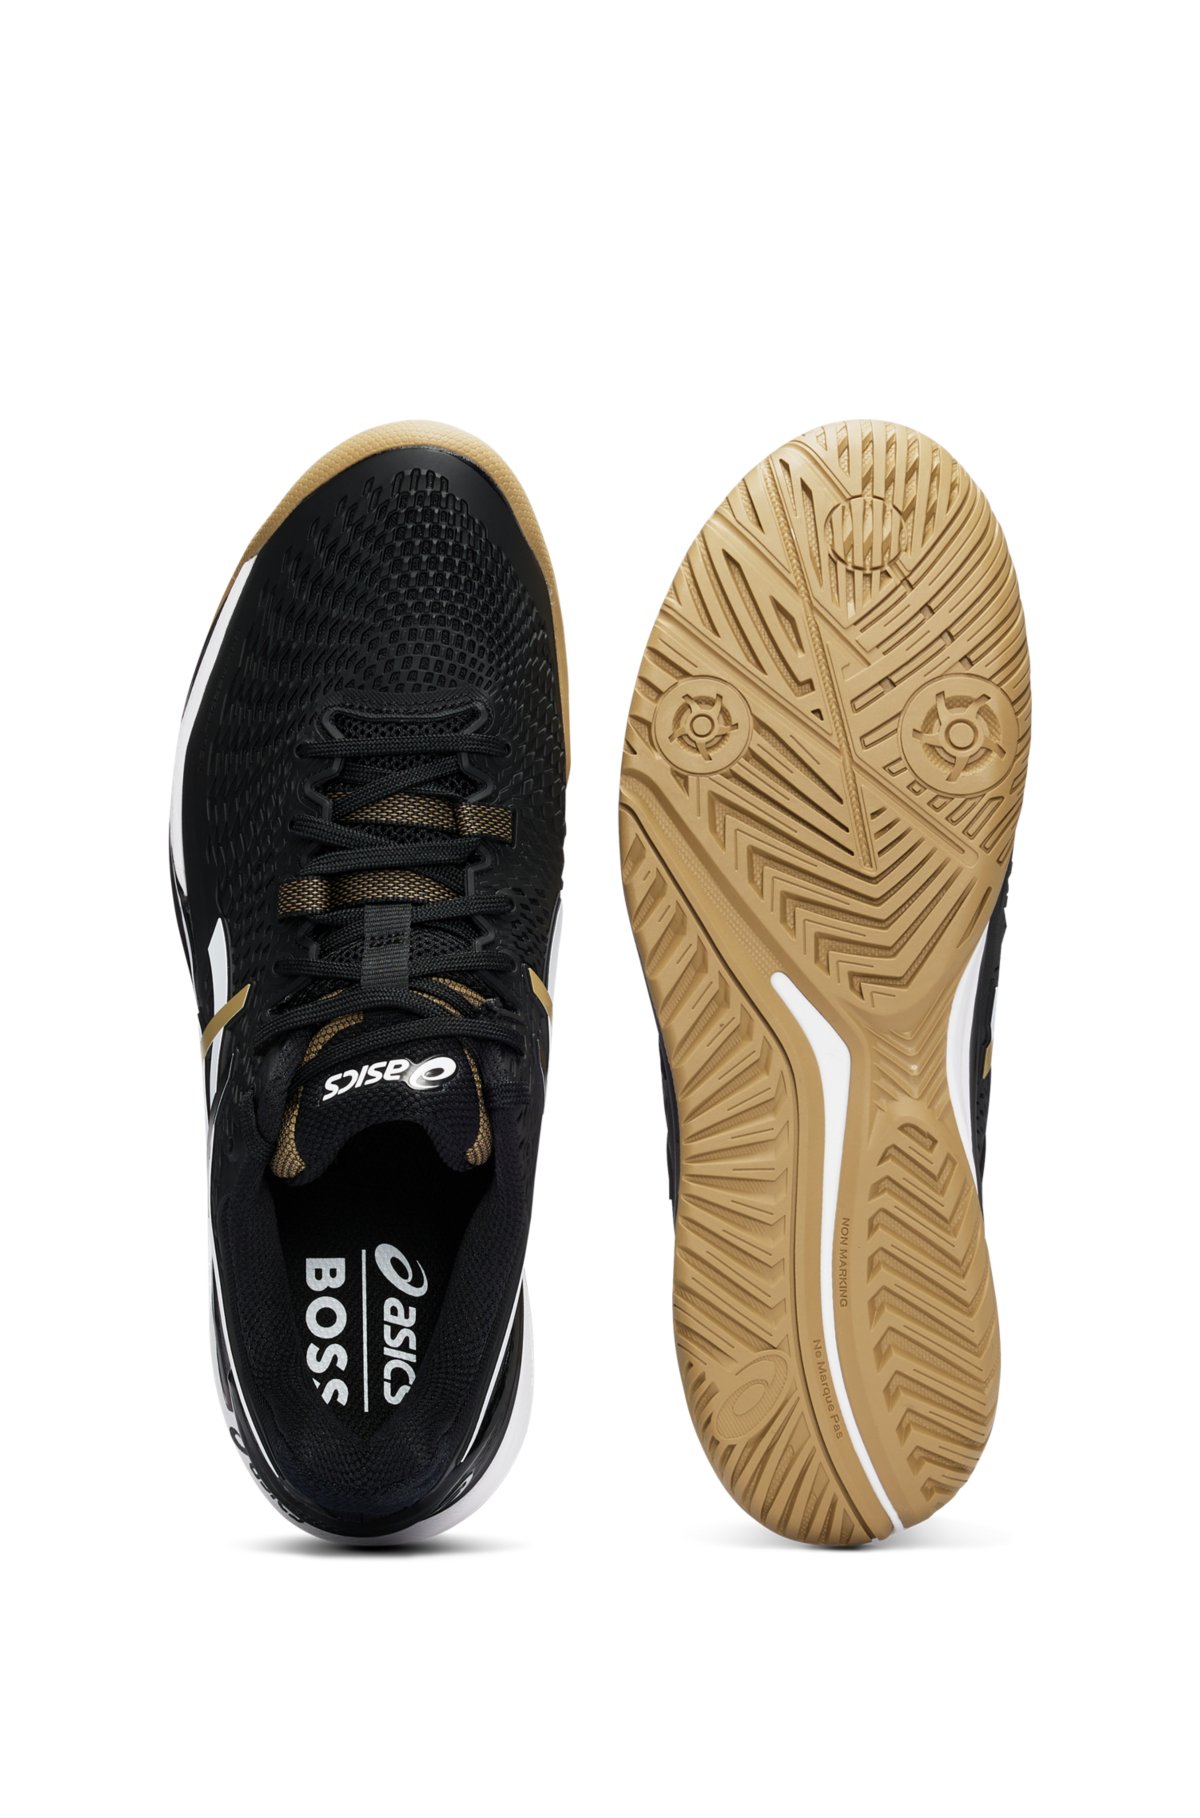 Asics x BOSS Gel Resolution 9 Men's Tennis Shoes - Black/Camel